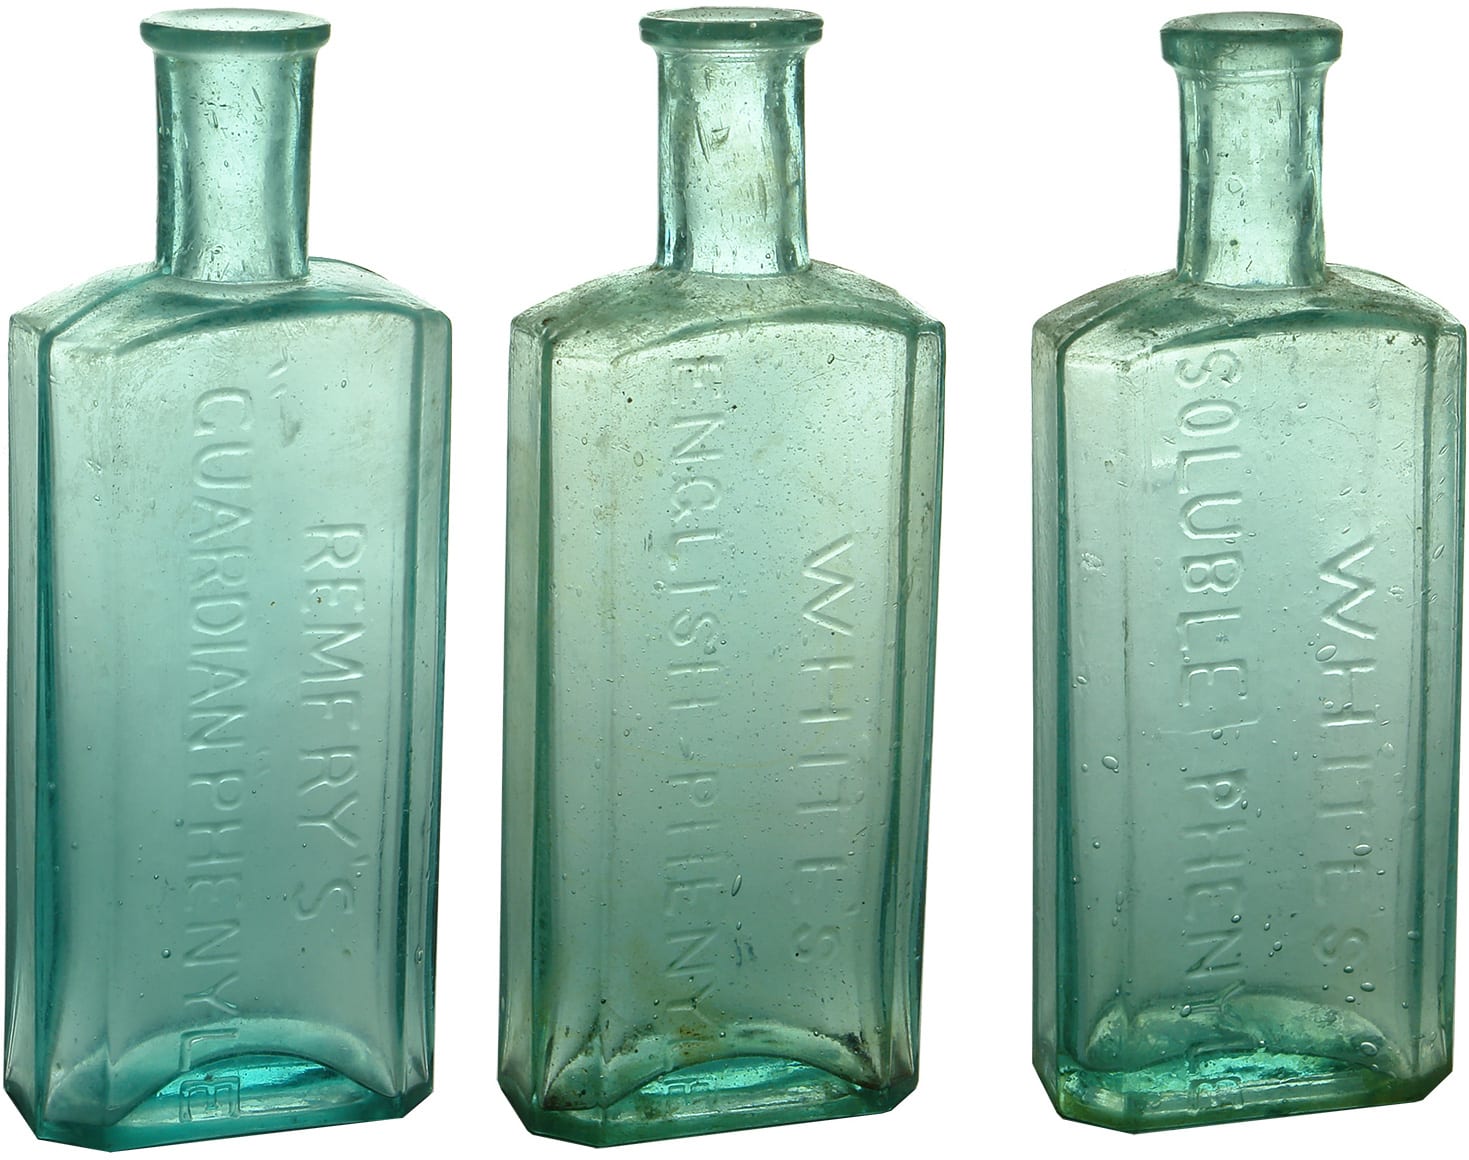 Antique Phenyle Poison Bottles